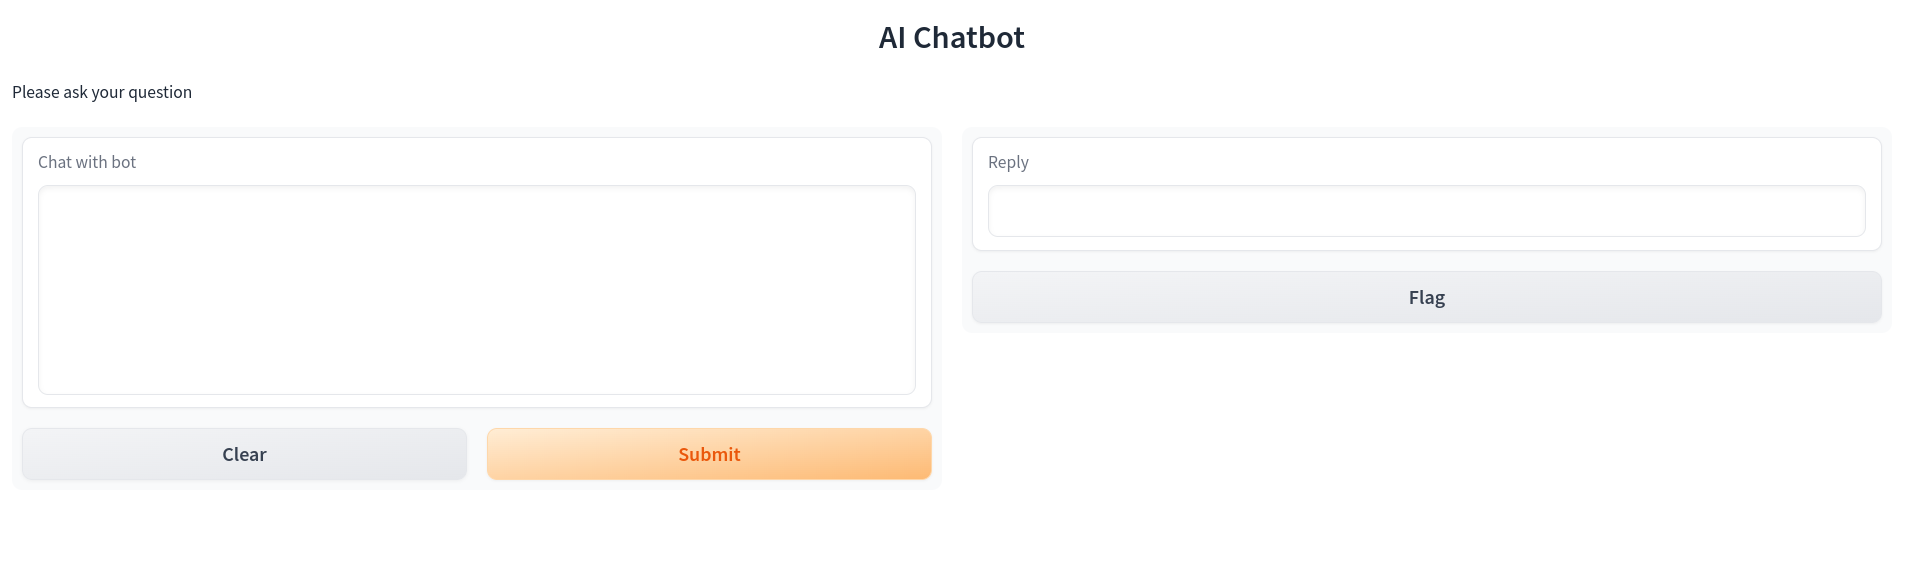 chatbot-interface